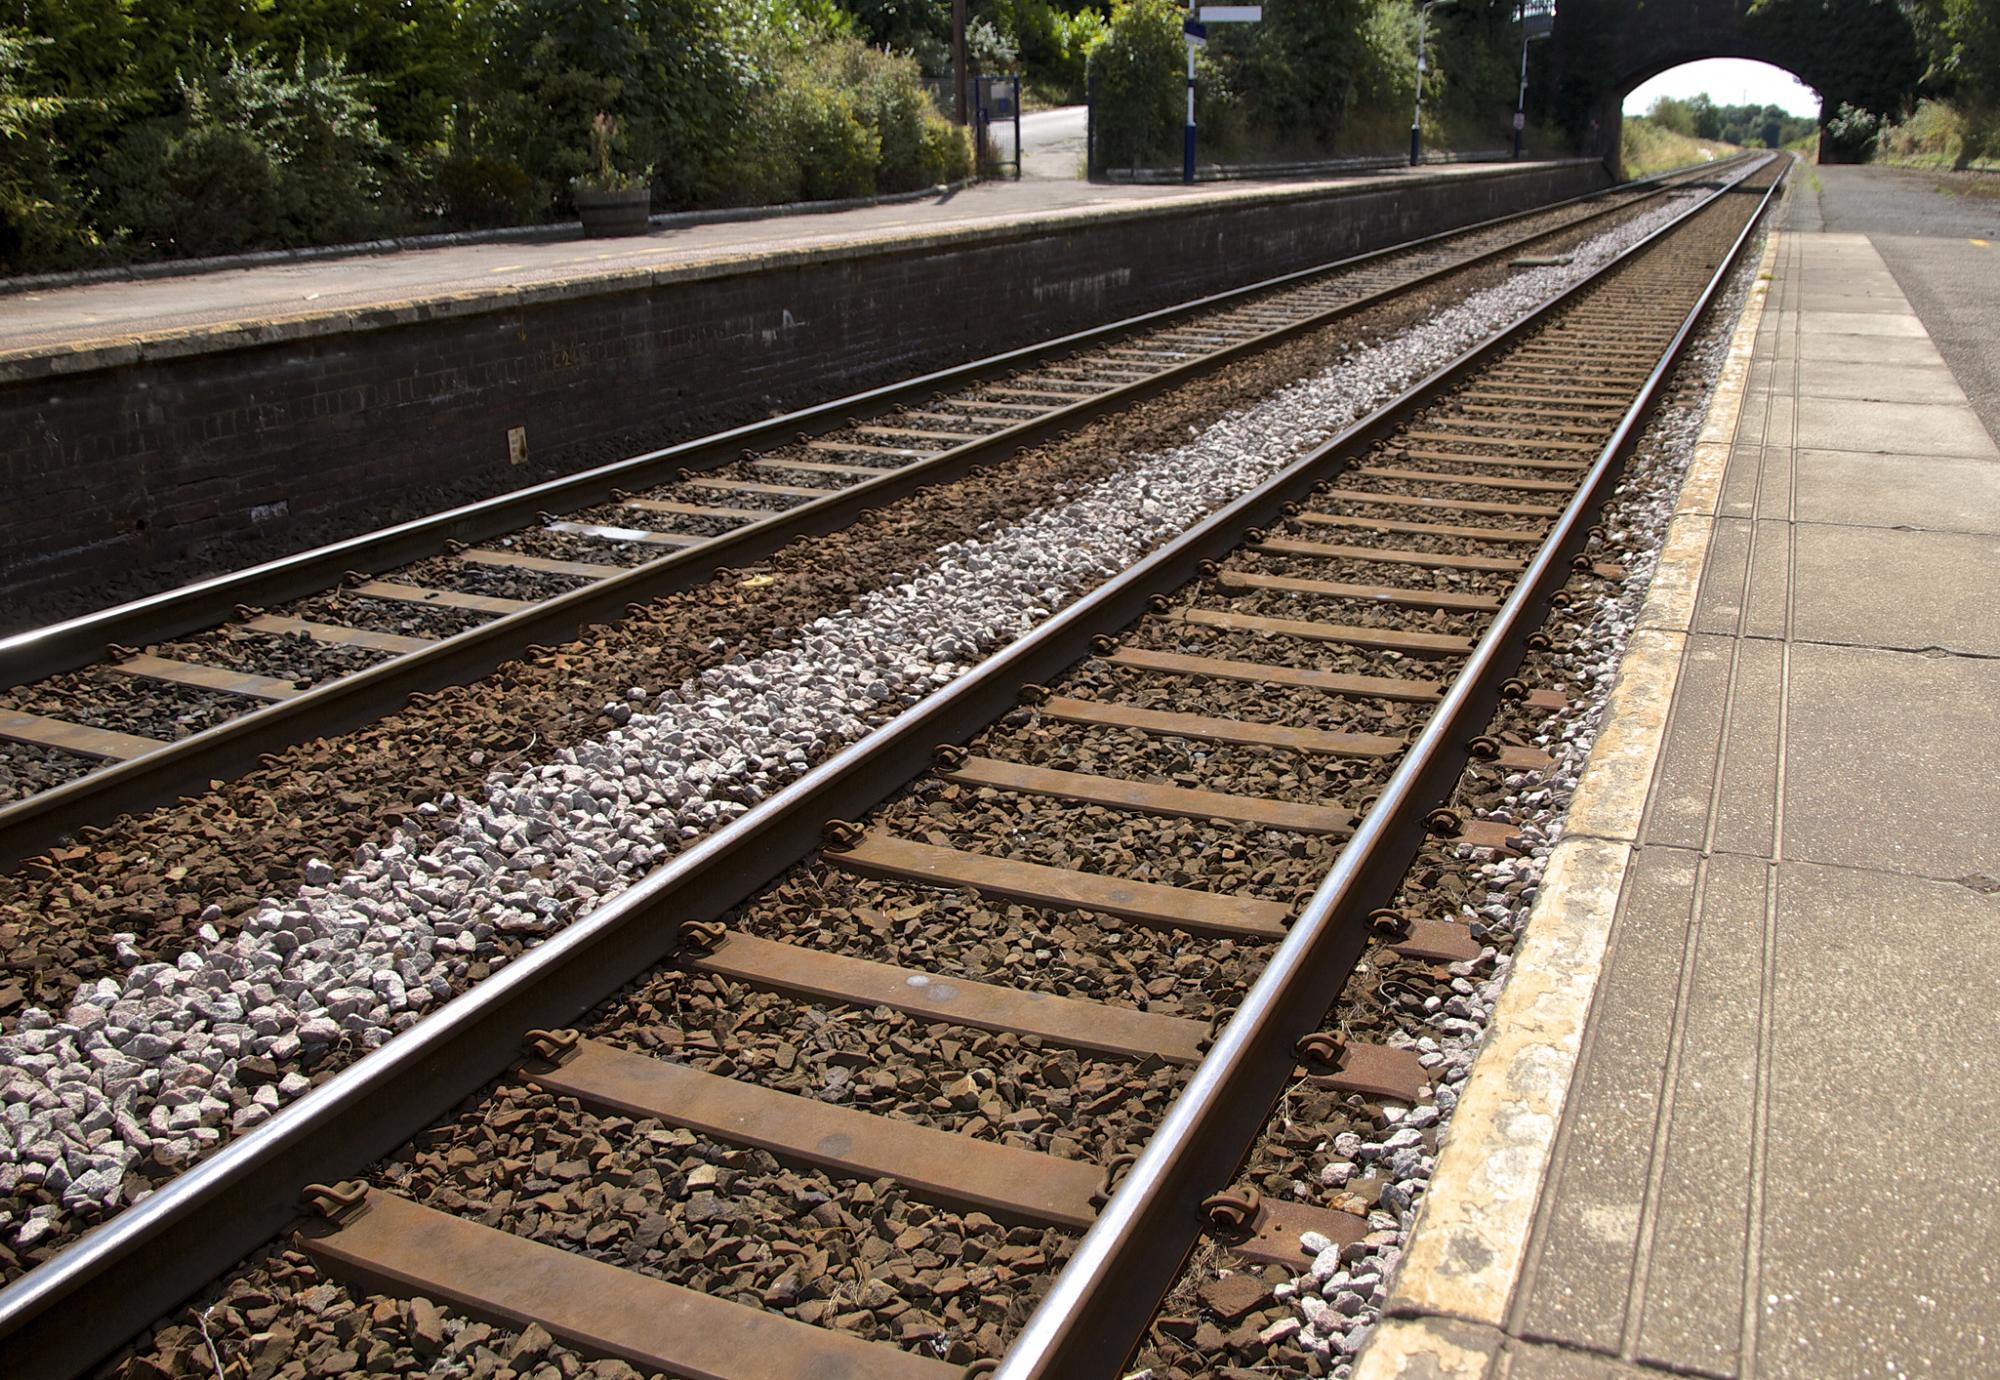 Generic UK railway station platform